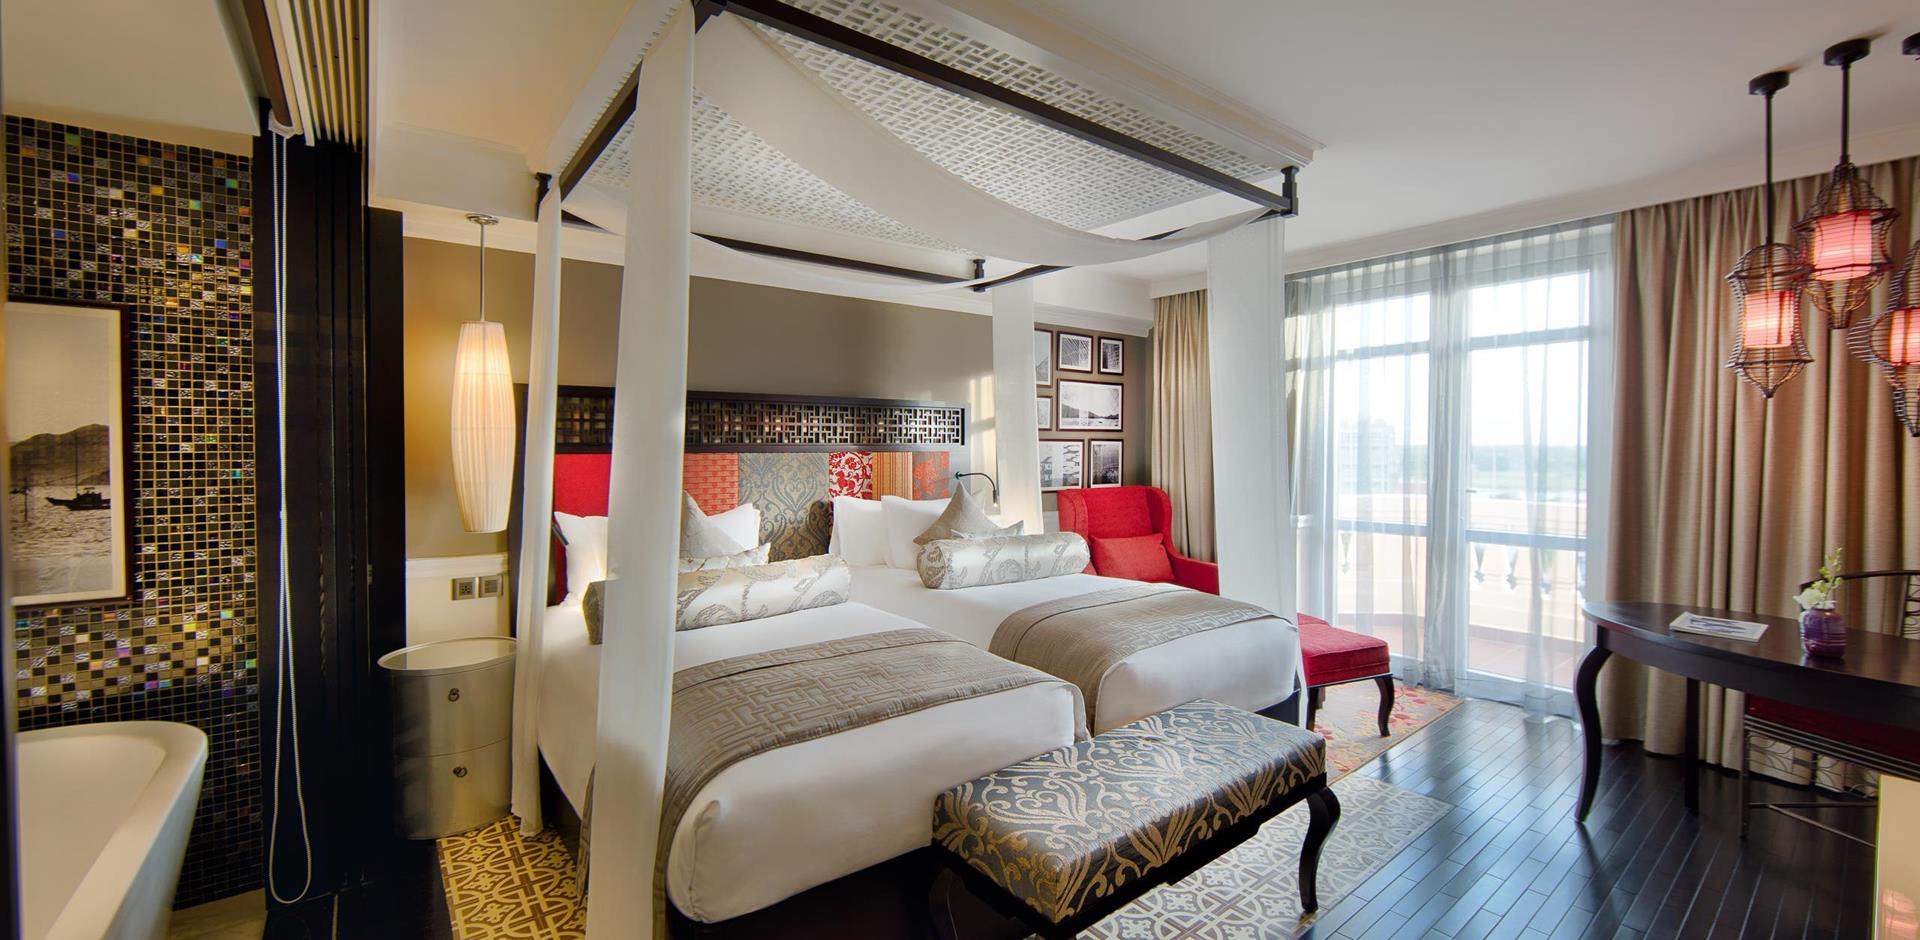 Bedroom, Hotel Royal Hoi An – MGallery by Sofitel, Vietnam